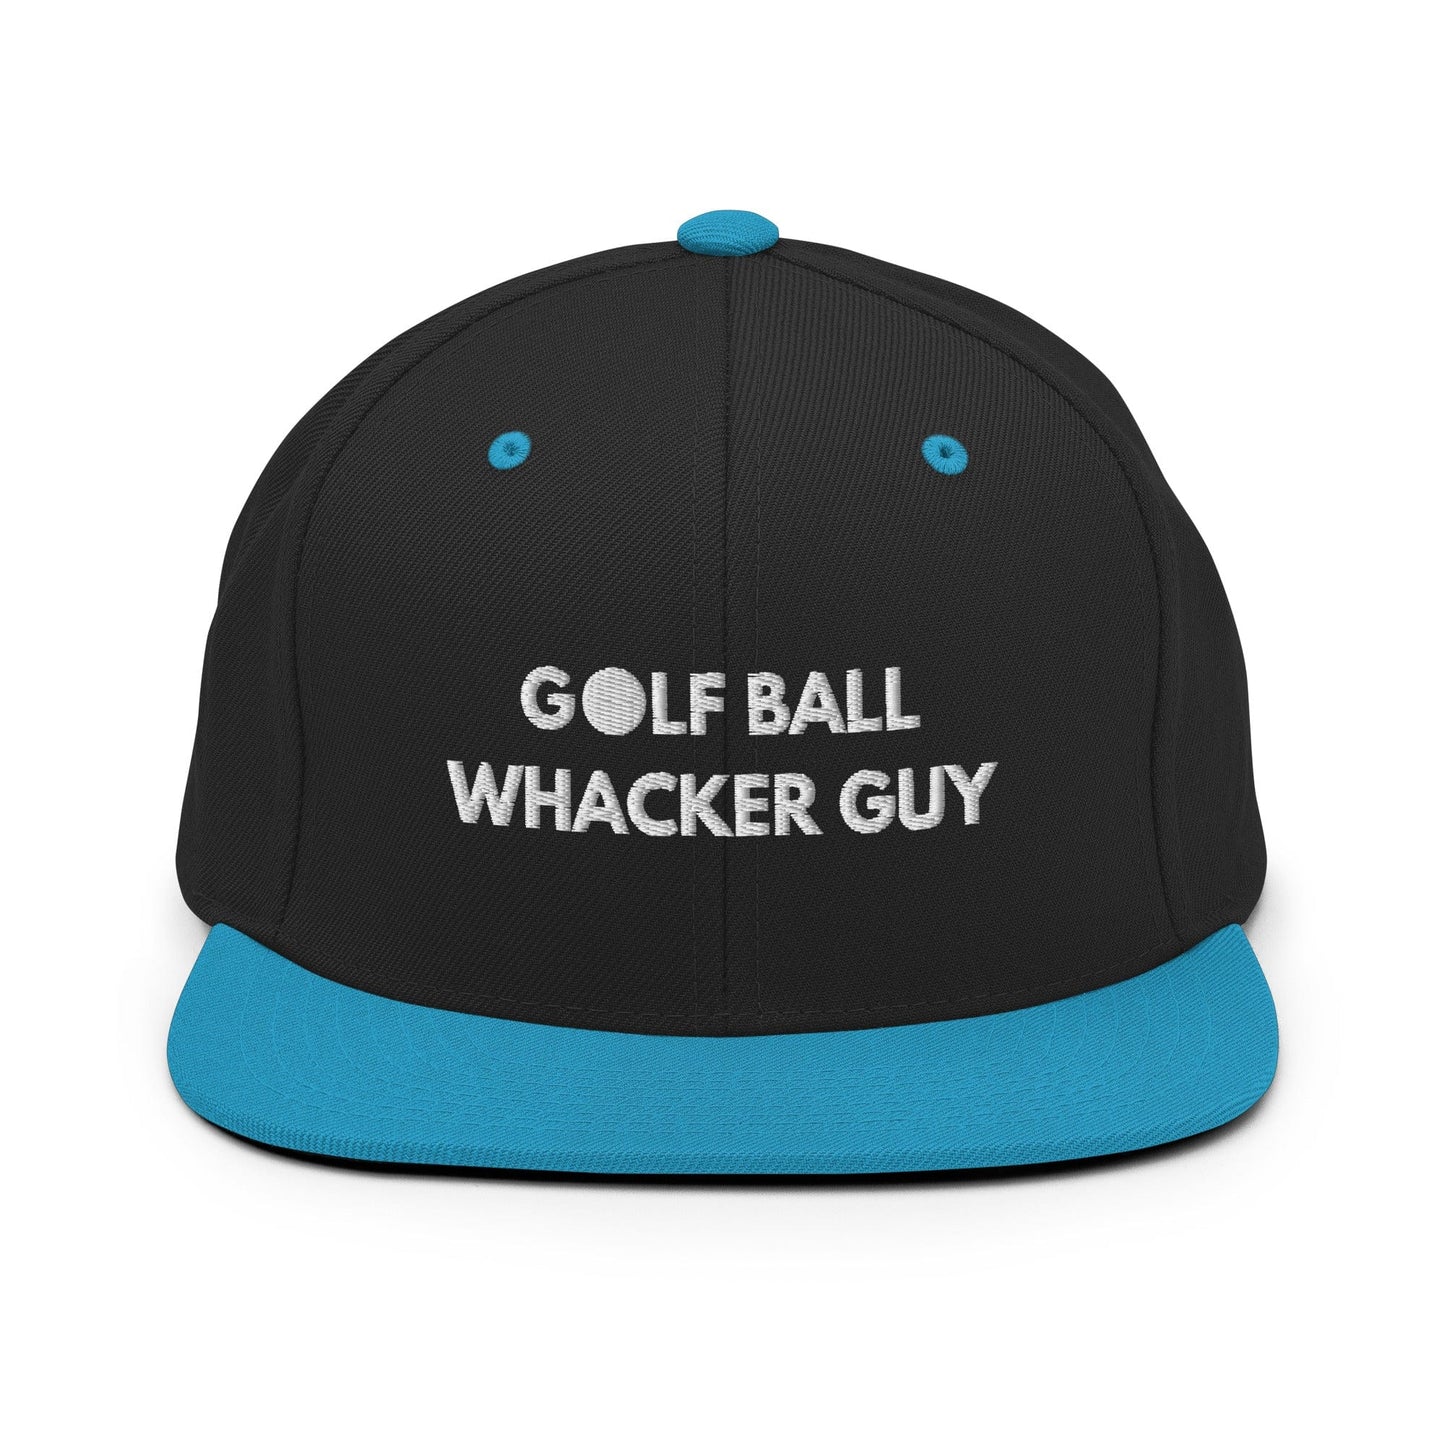 Funny Golfer Gifts  Snapback Hat Black/ Teal Golf Ball Whacker Guy Hat Snapback Hat